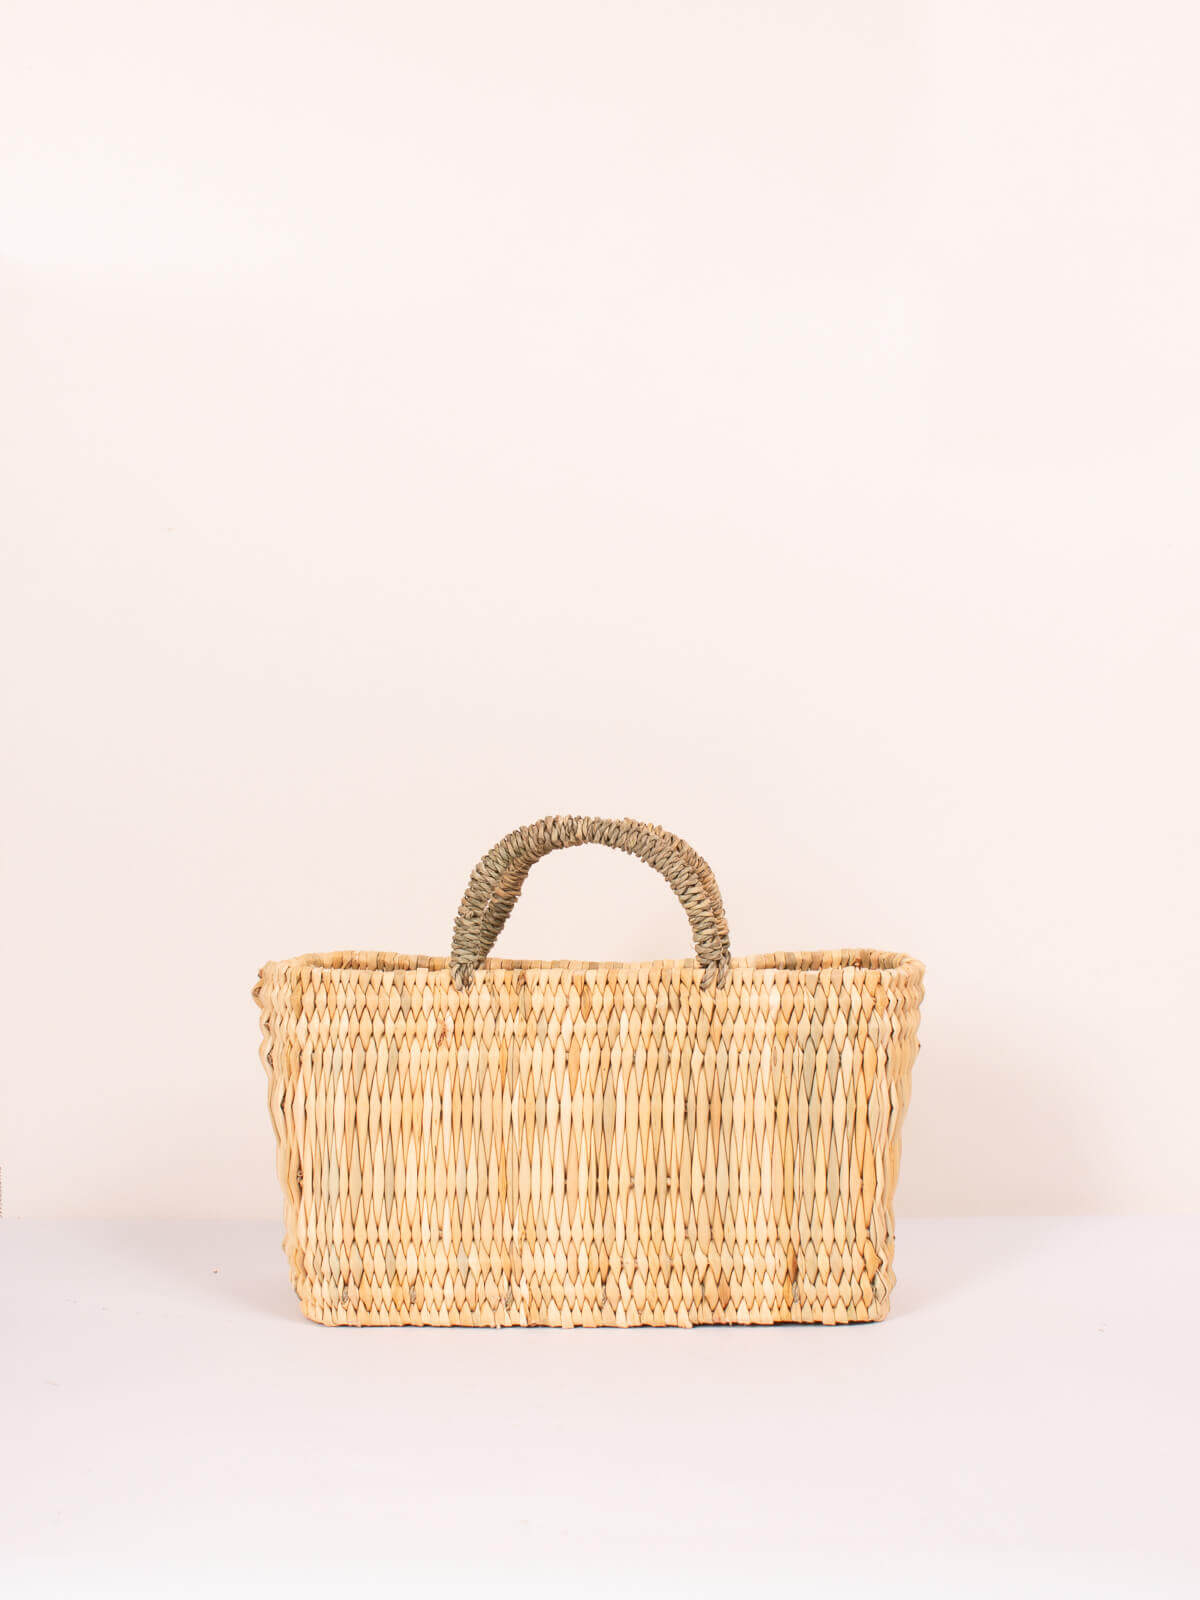 Reed Storage Baskets